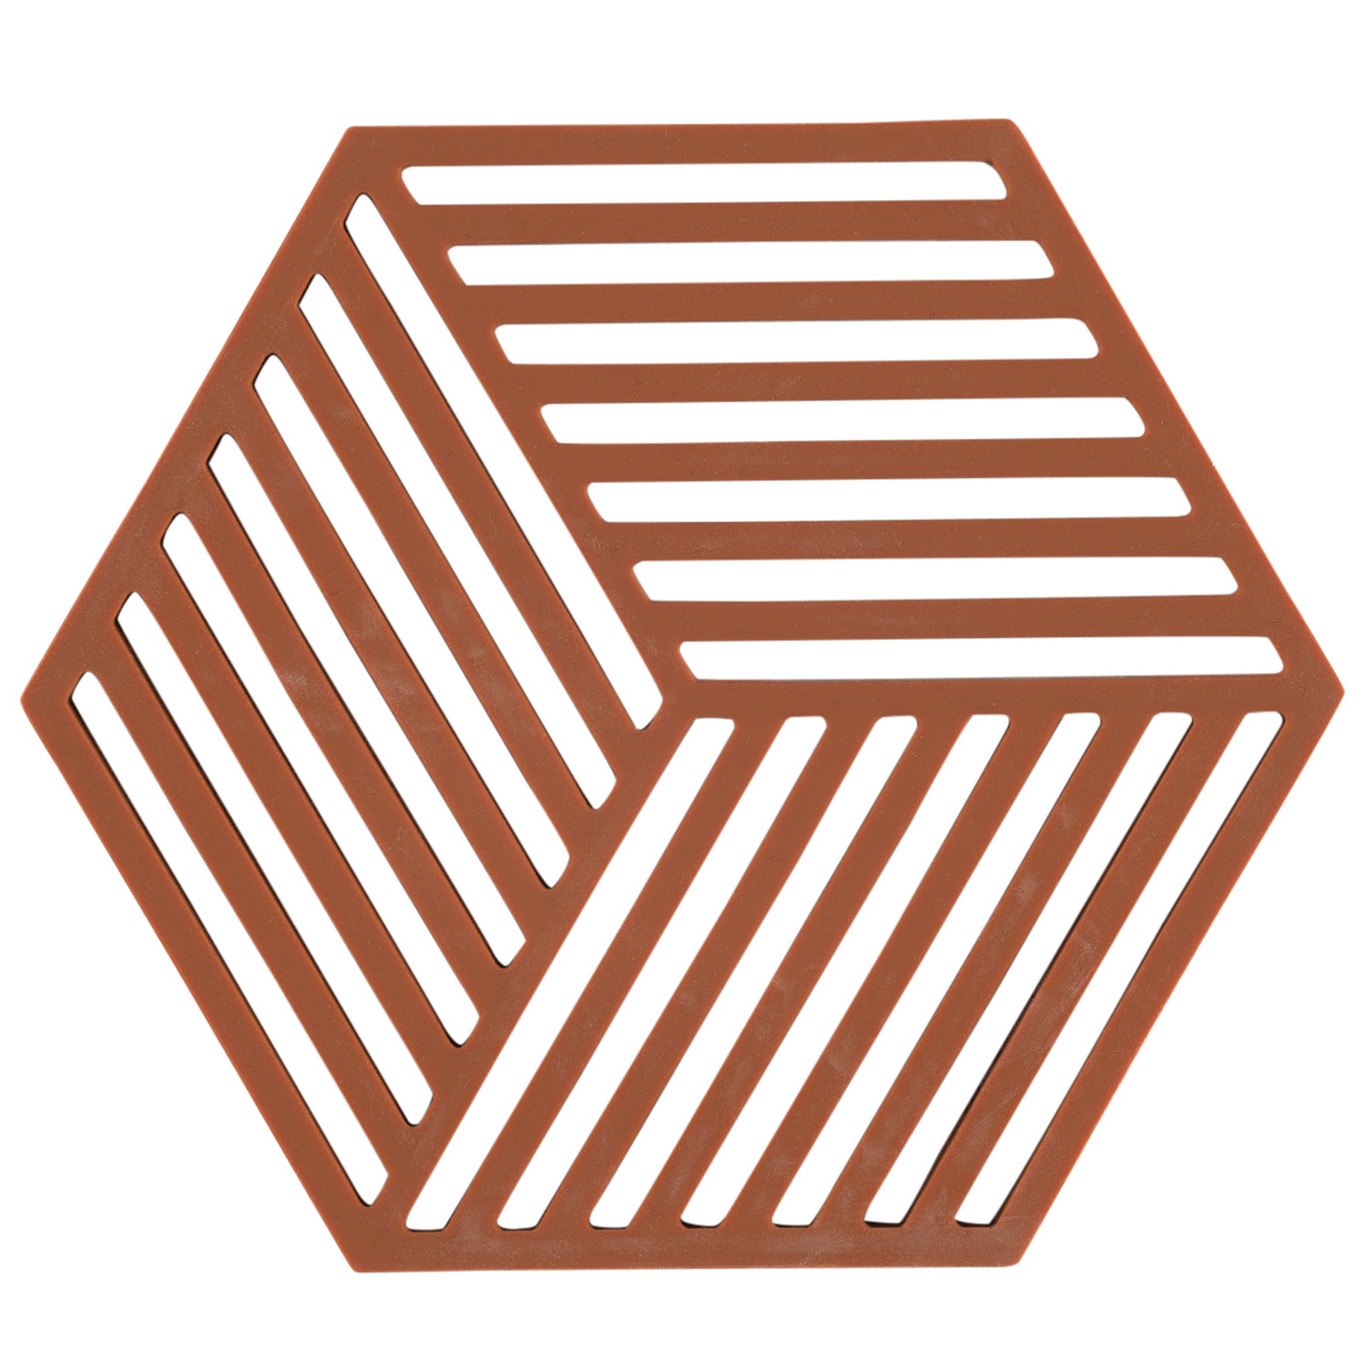 Hexagon Grytunderlägg, Terrakotta